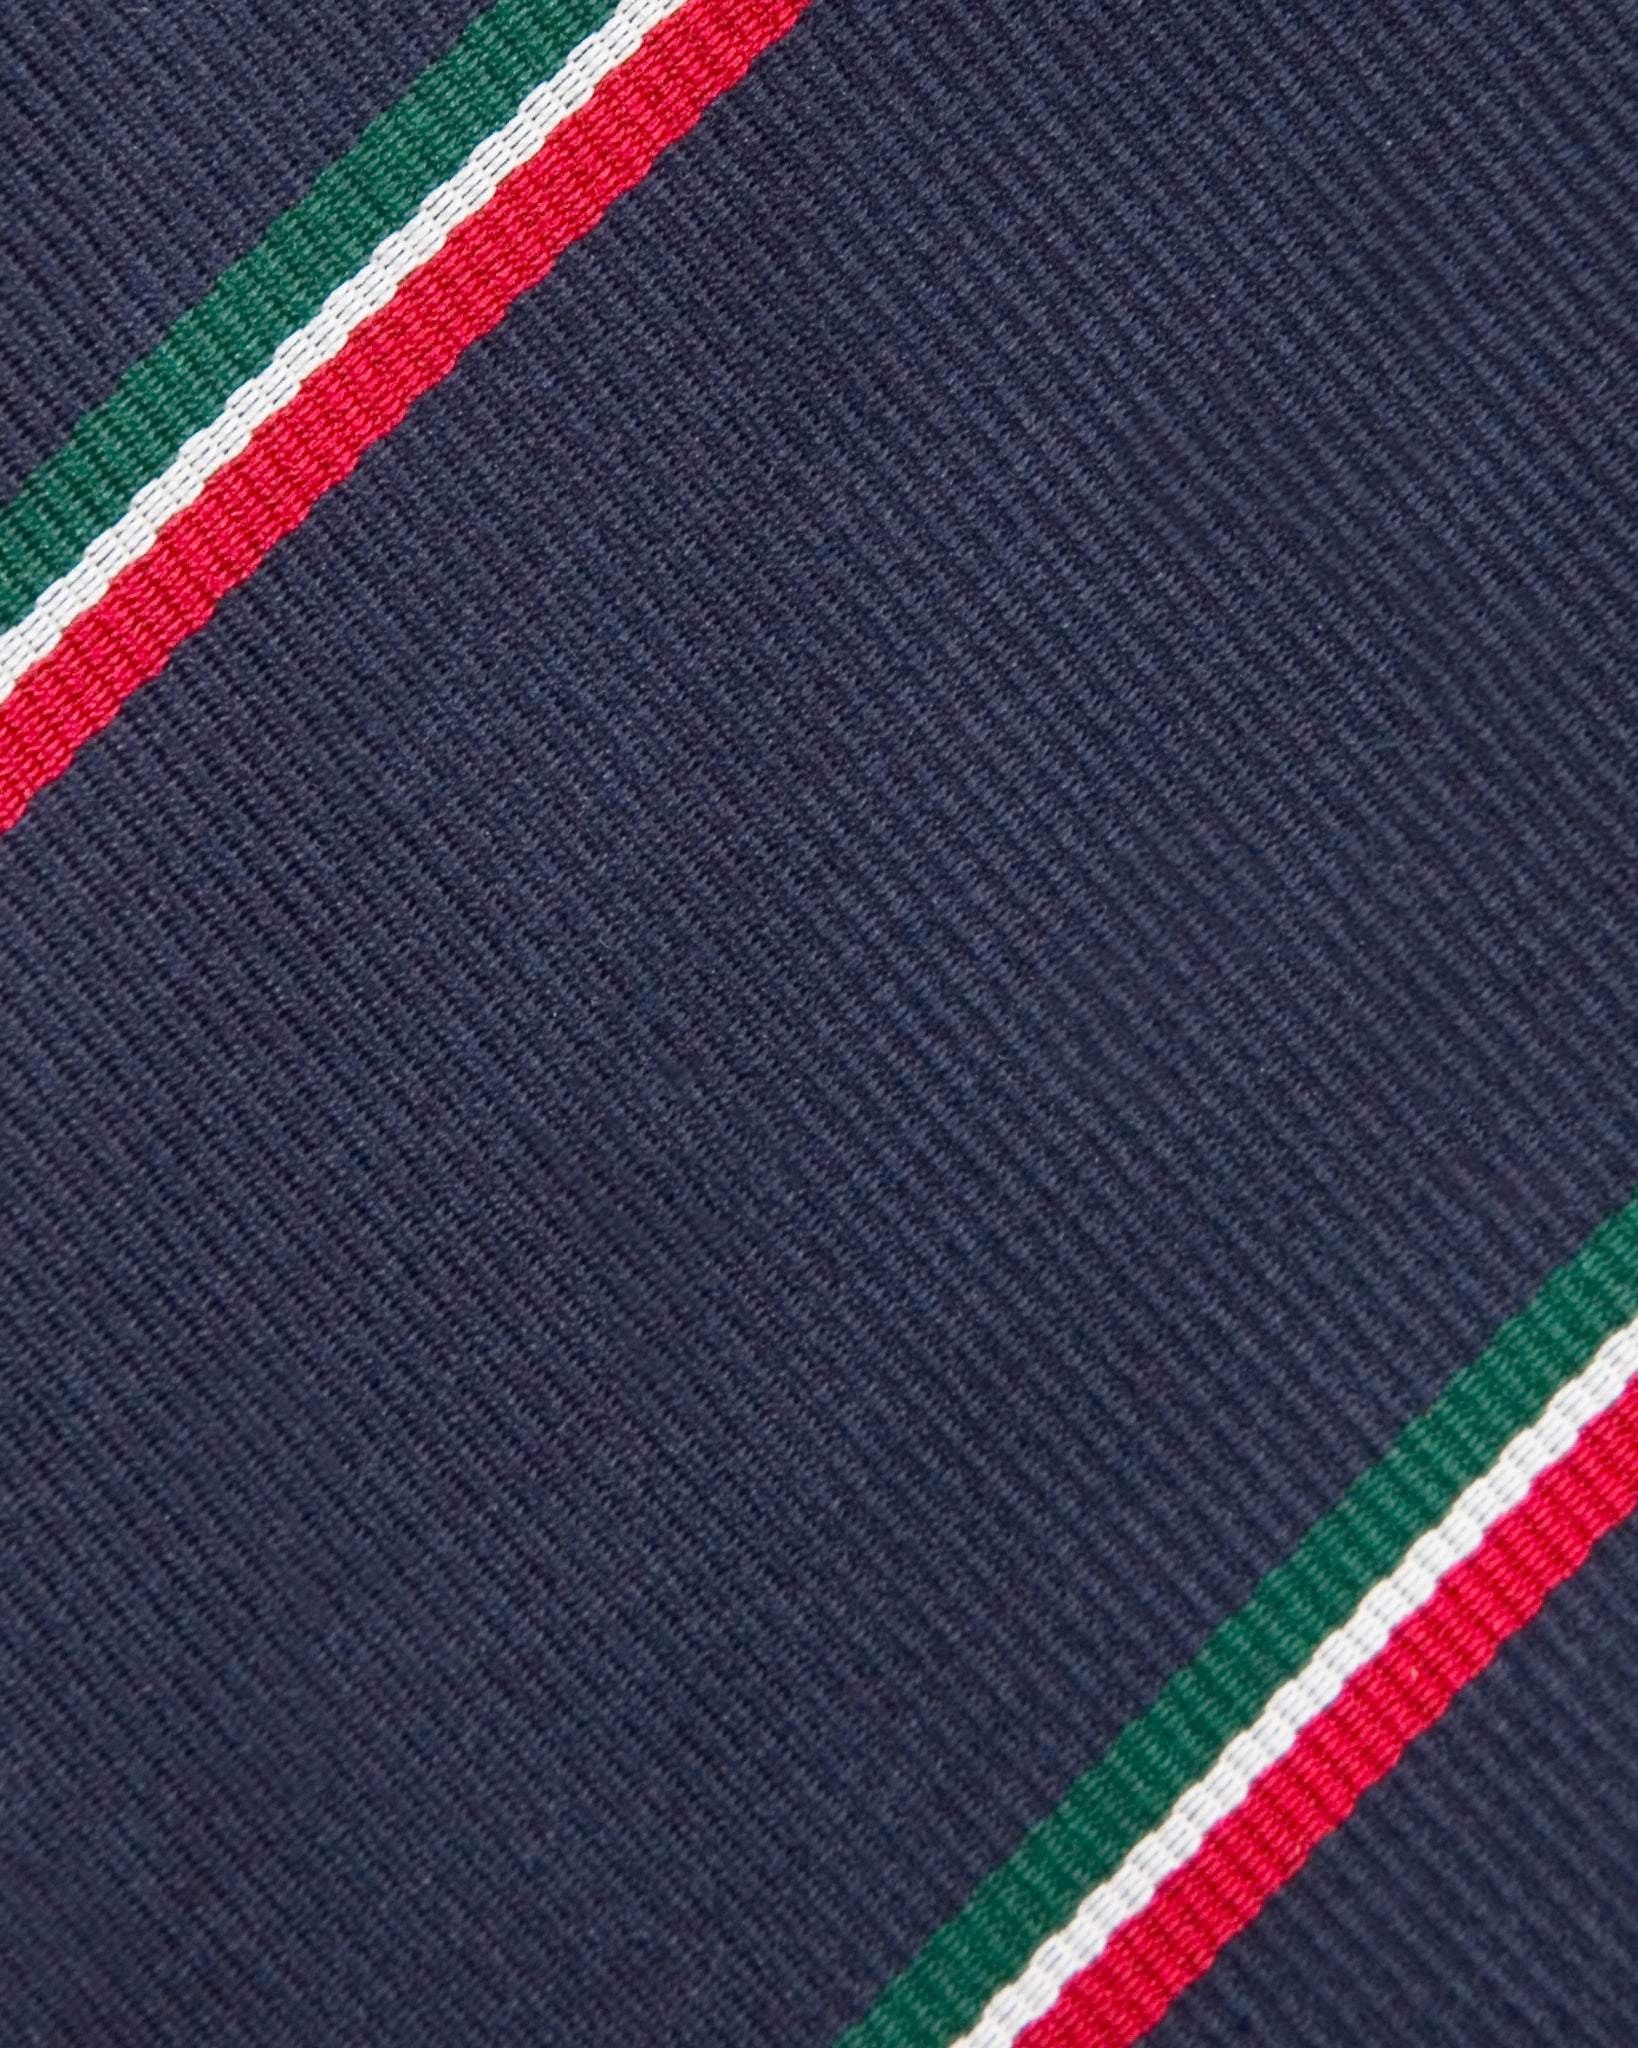 Silk Repp Tie Navy/Red/White/Green Repp Stri